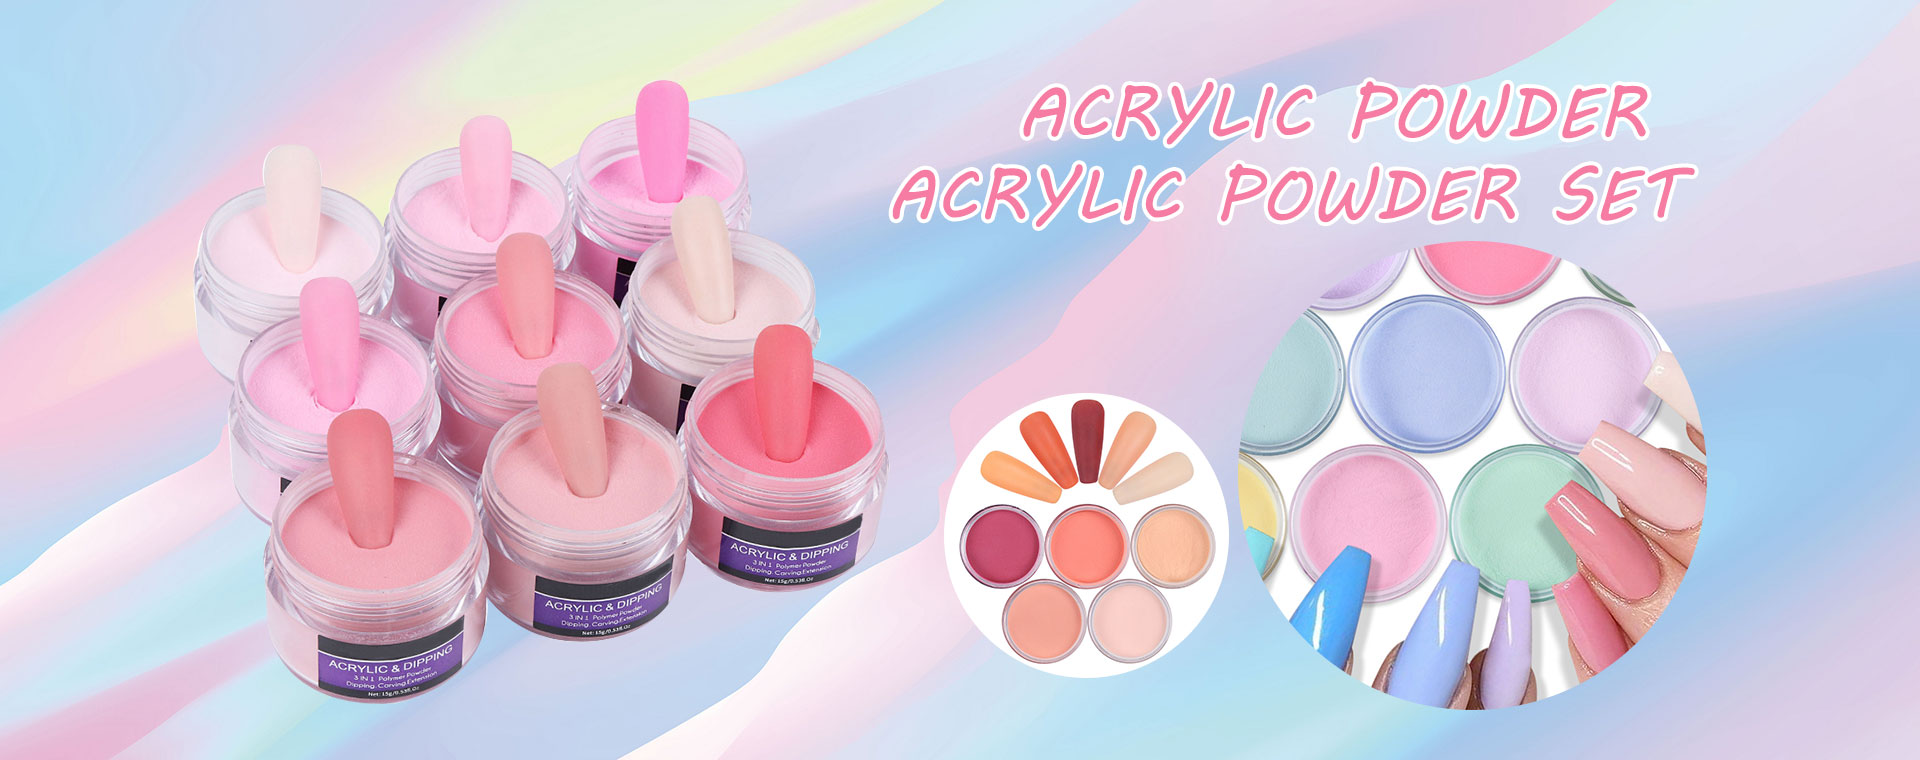 Acrylic Powder&Acrylic Powder Set Manufacturers